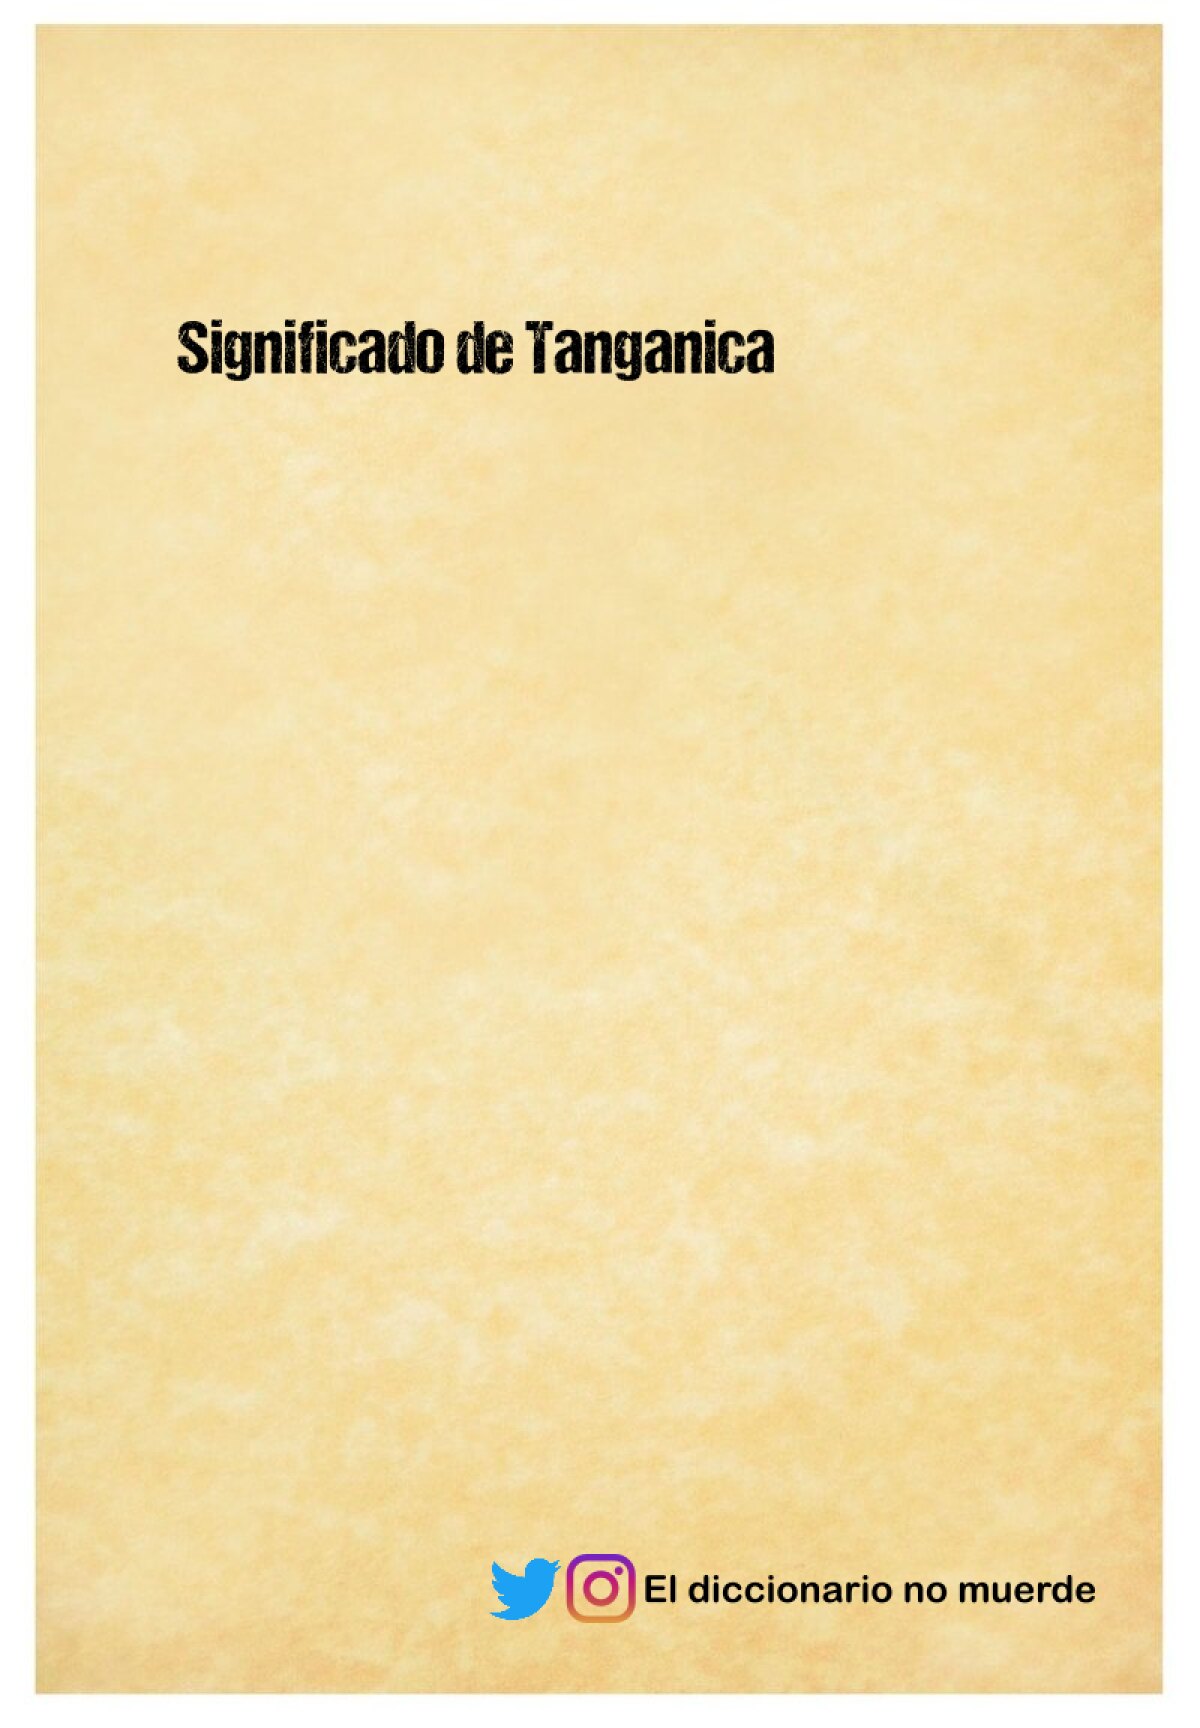 Significado de Tanganica